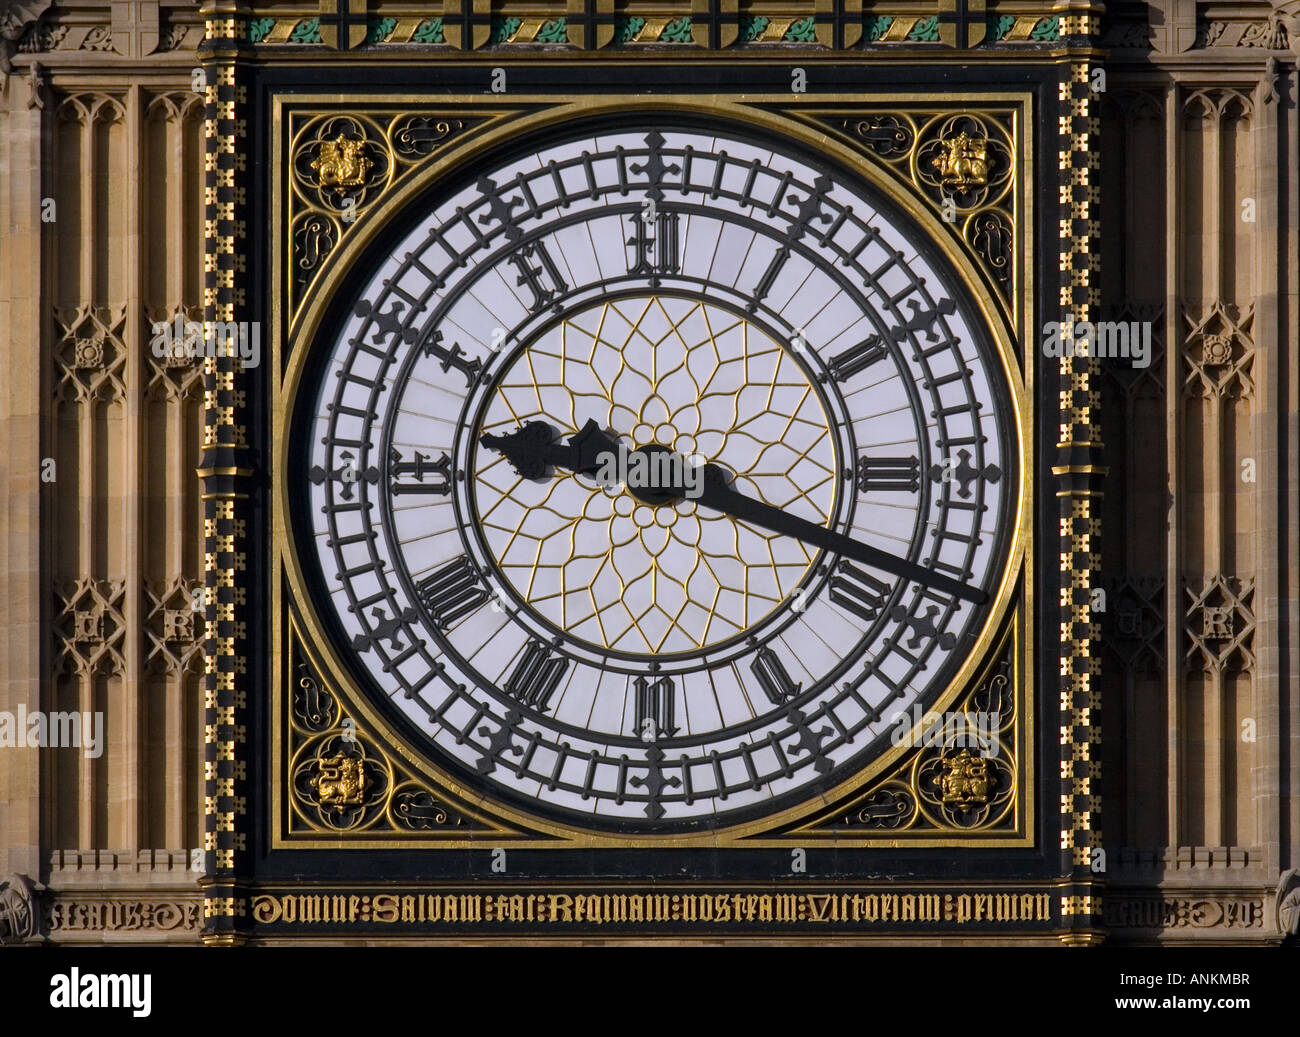 Big Ben clock face in London, England. Stock Photo